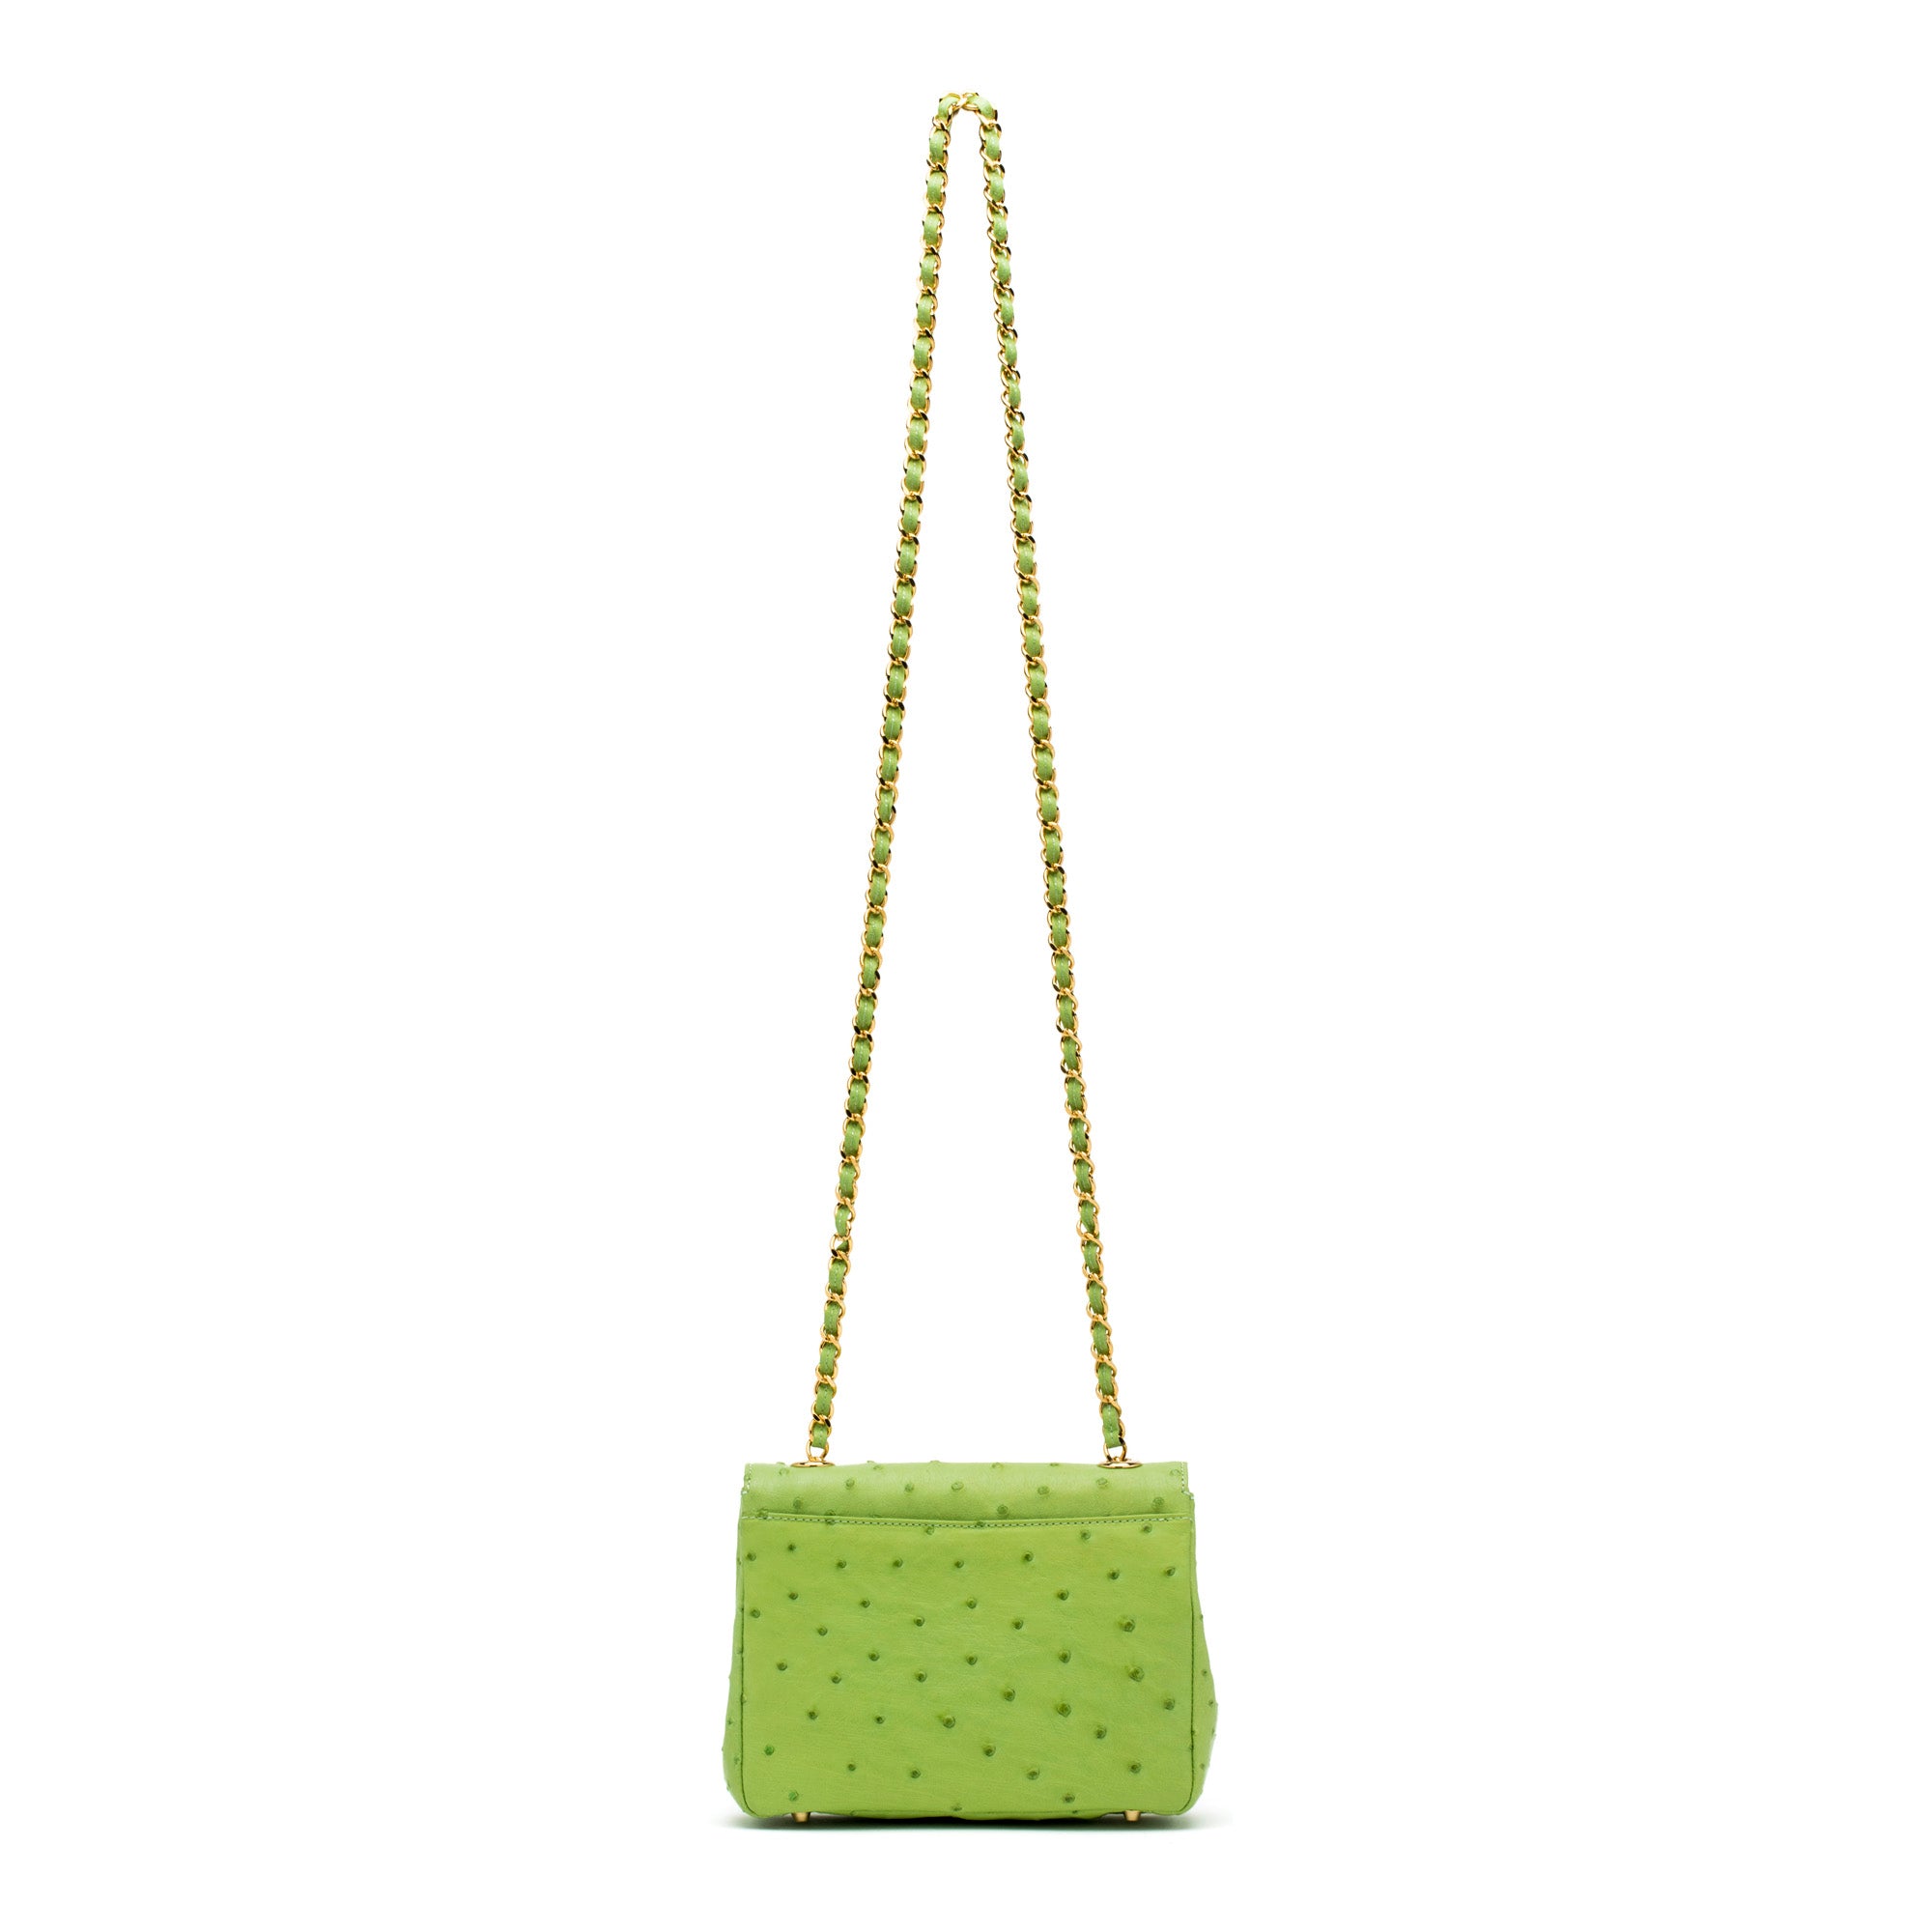 Medium Chain Bag in Lime Green